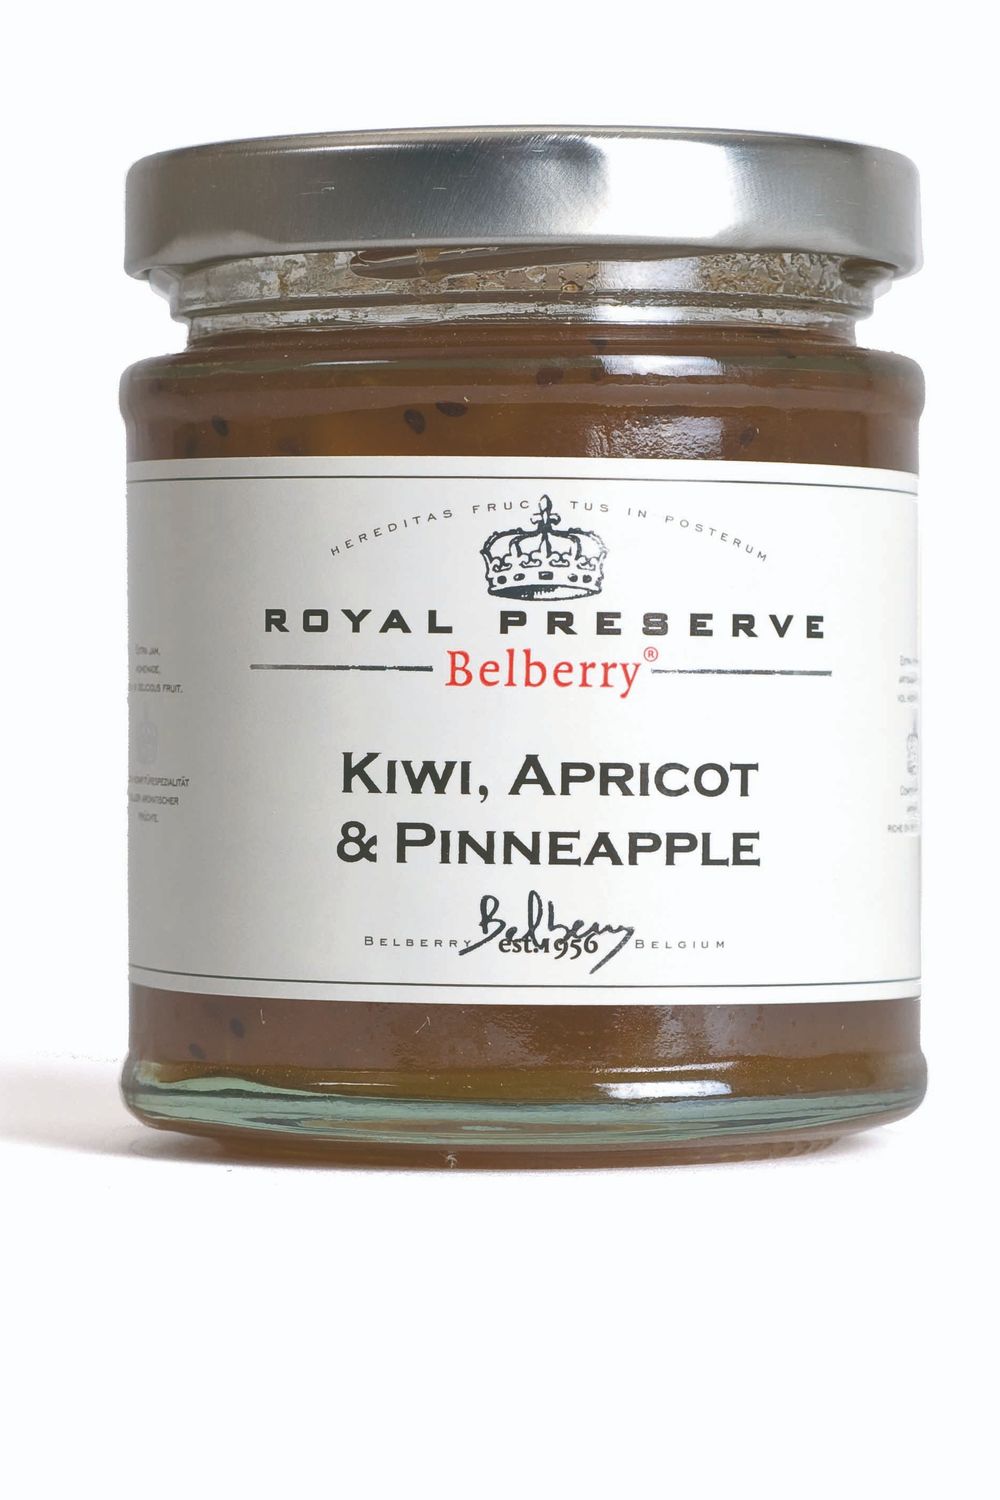 Kiwi, Apricot & Pineapple Preserve